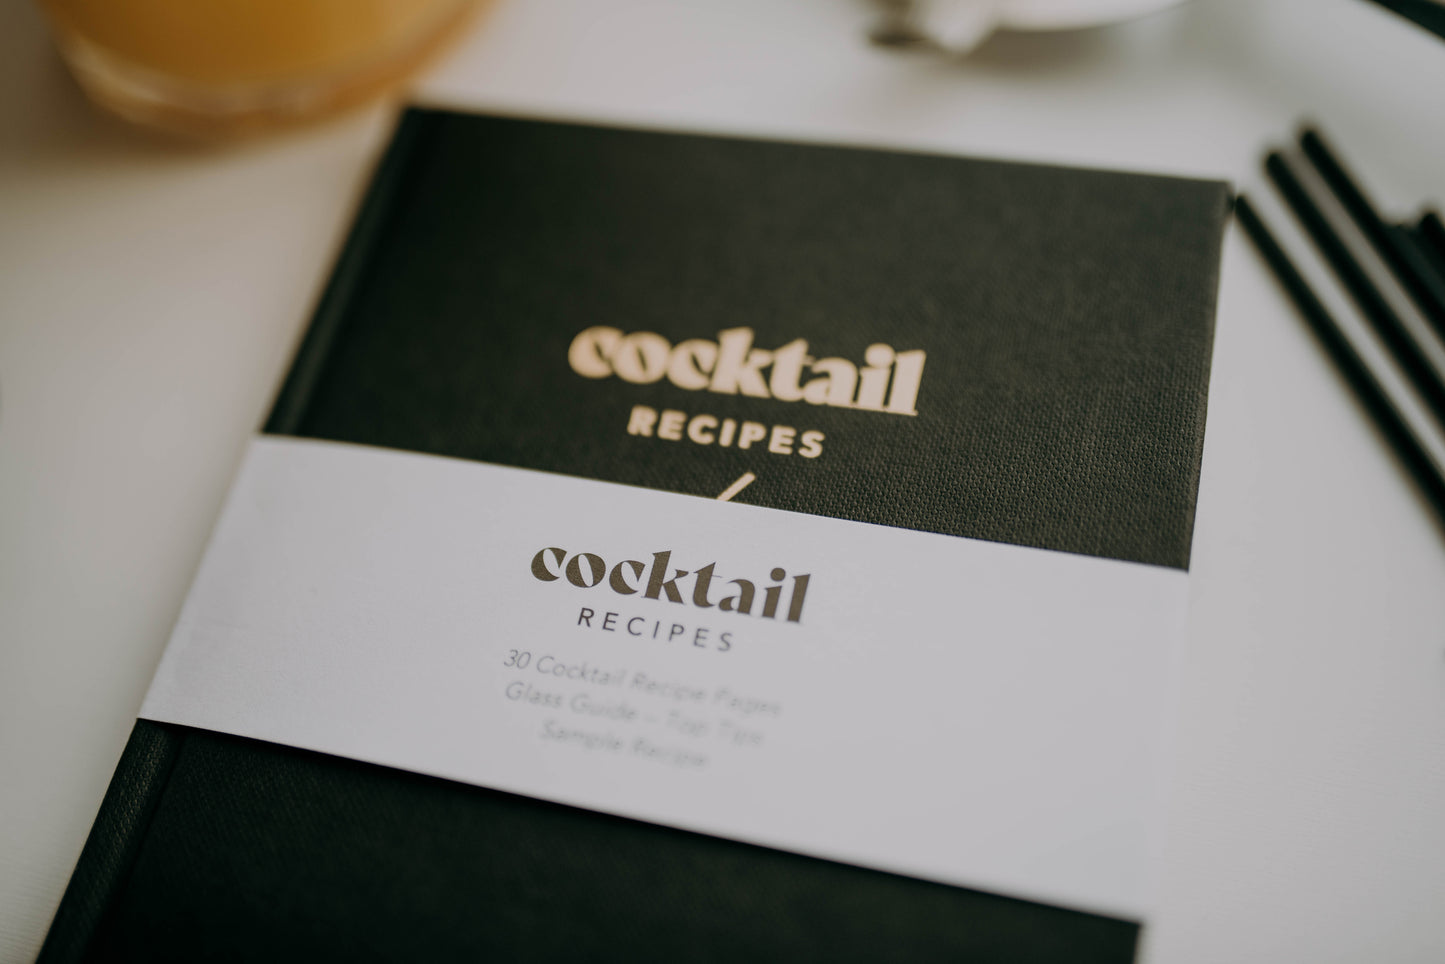 Cocktail Recipe Book